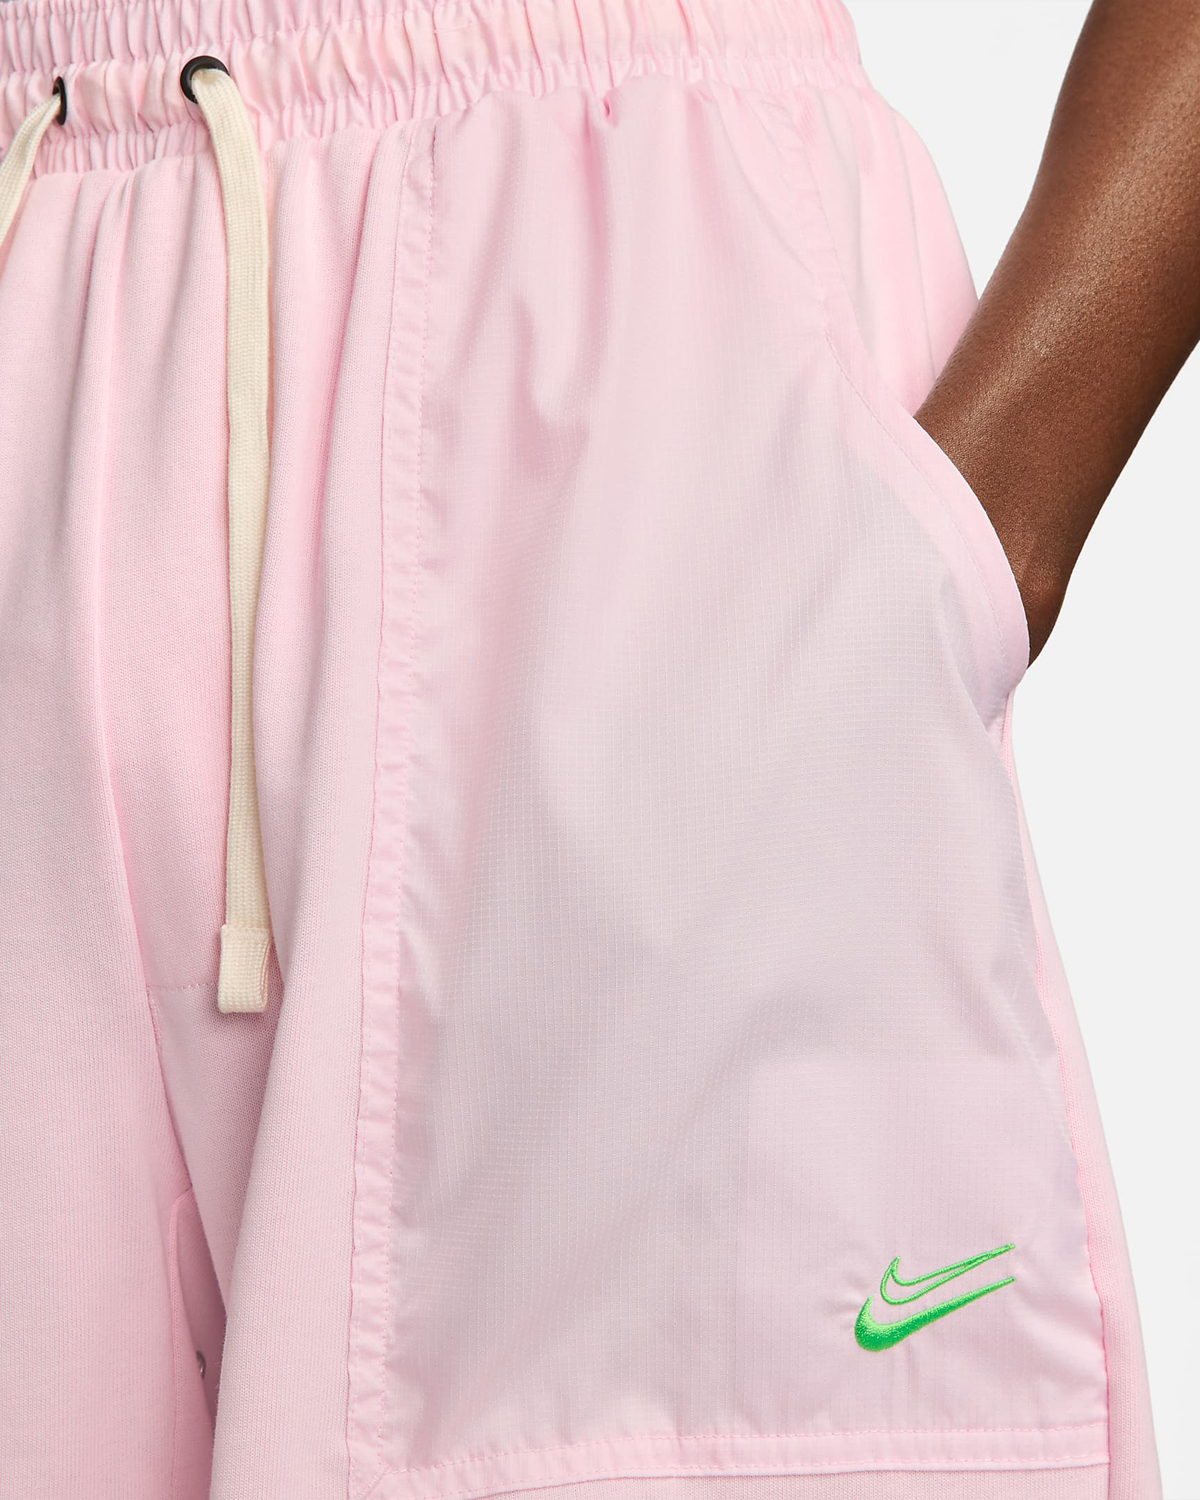 Nike-KD-Kevin-Durant-Fleece-Basketball-Shorts-Pink-Foam-2